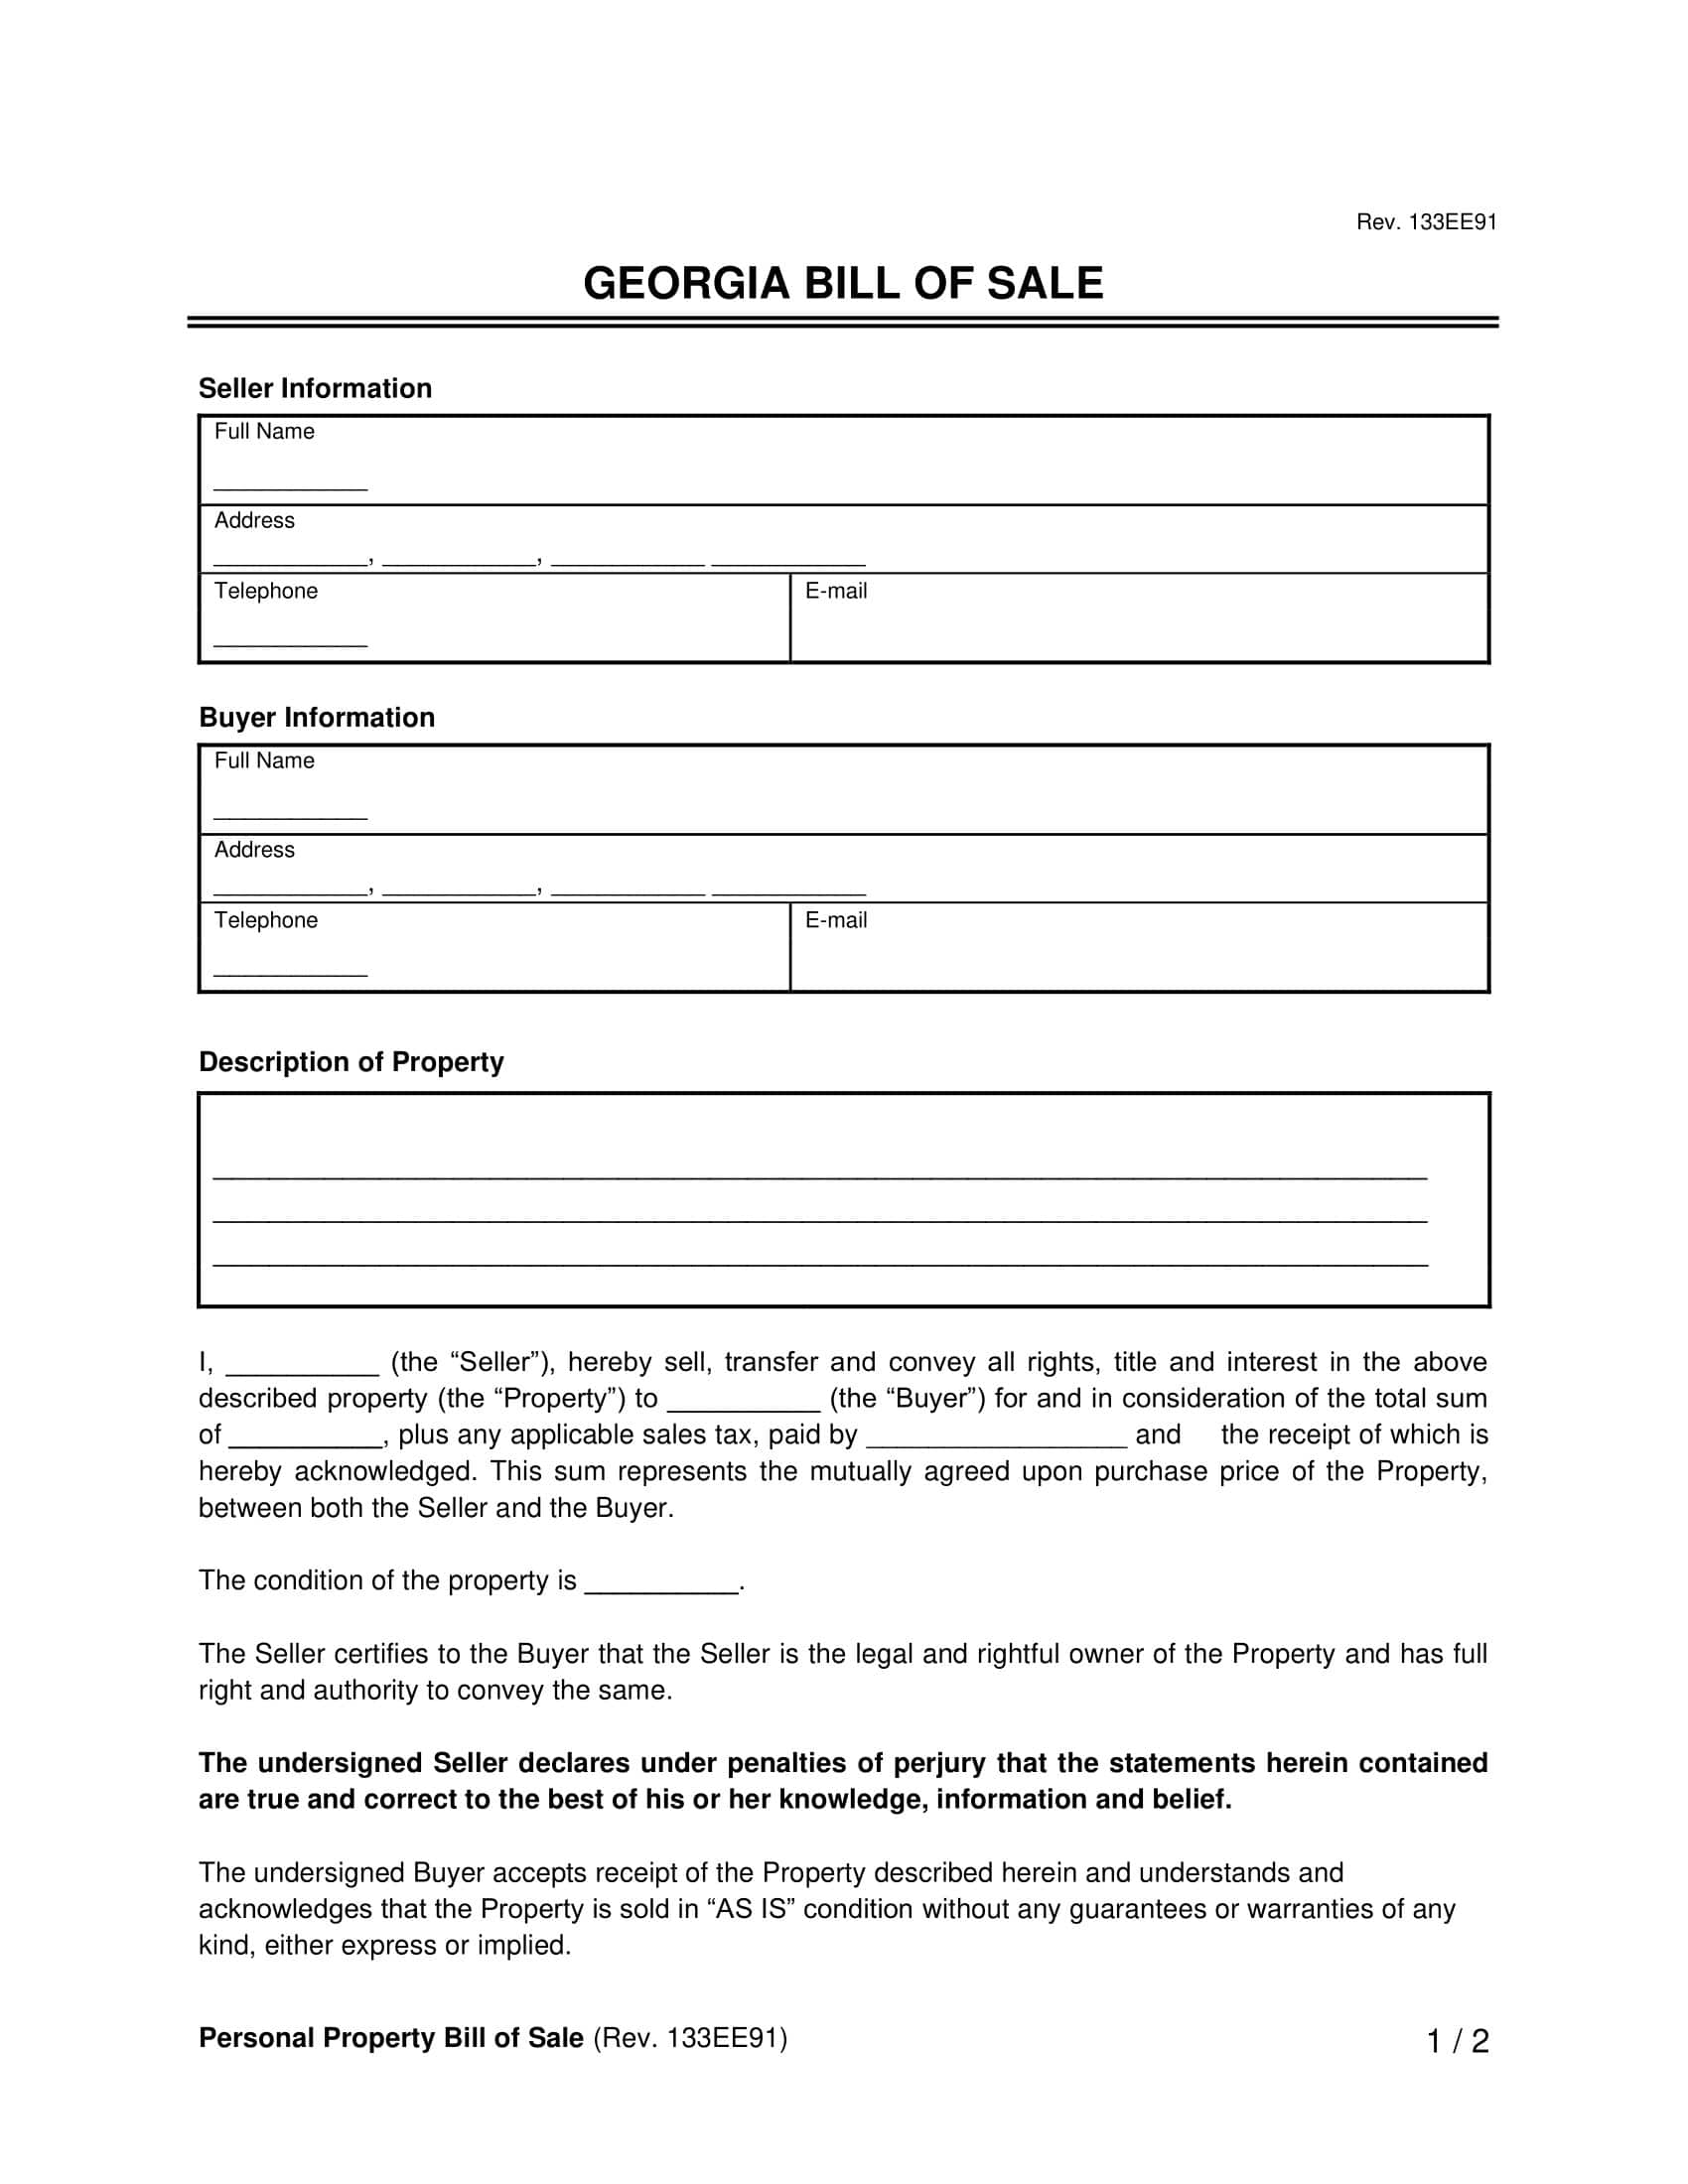 Georgia General Bill of Sale screenshot